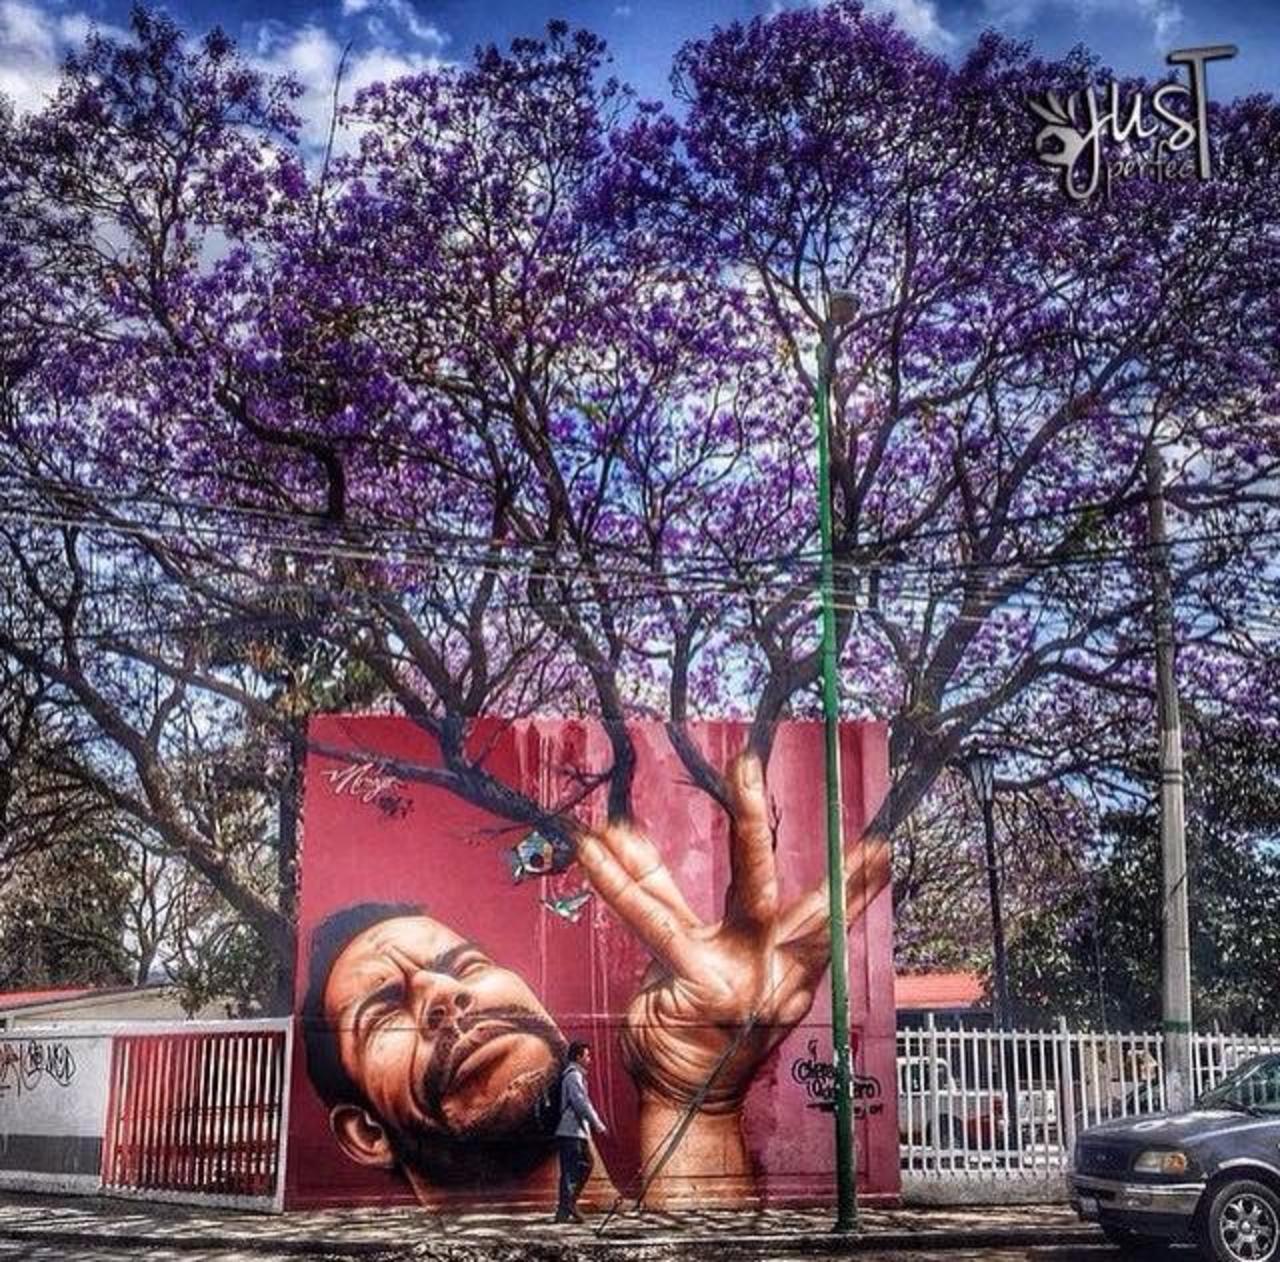 When Street Art meets nature

Work by Jose Luis Noriega
#art #arte #graffiti #streetart http://t.co/wWSWo2d25R googlestreetart chinatoniq